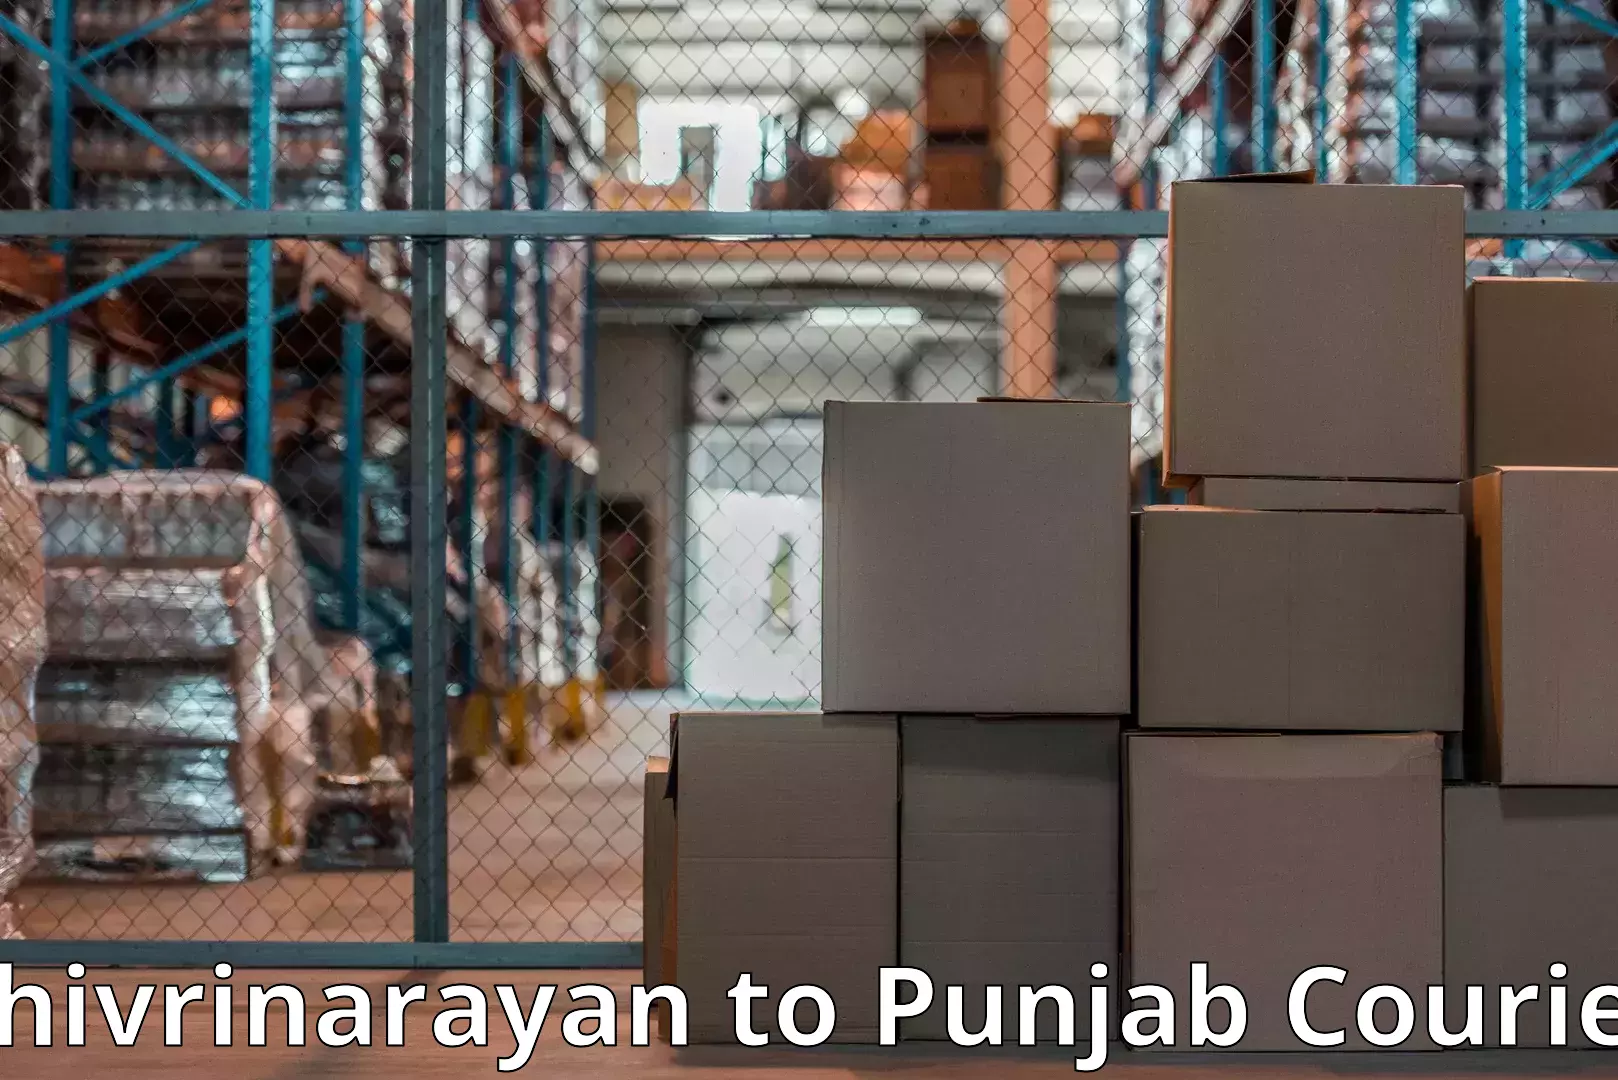 Quality relocation assistance Shivrinarayan to Punjab